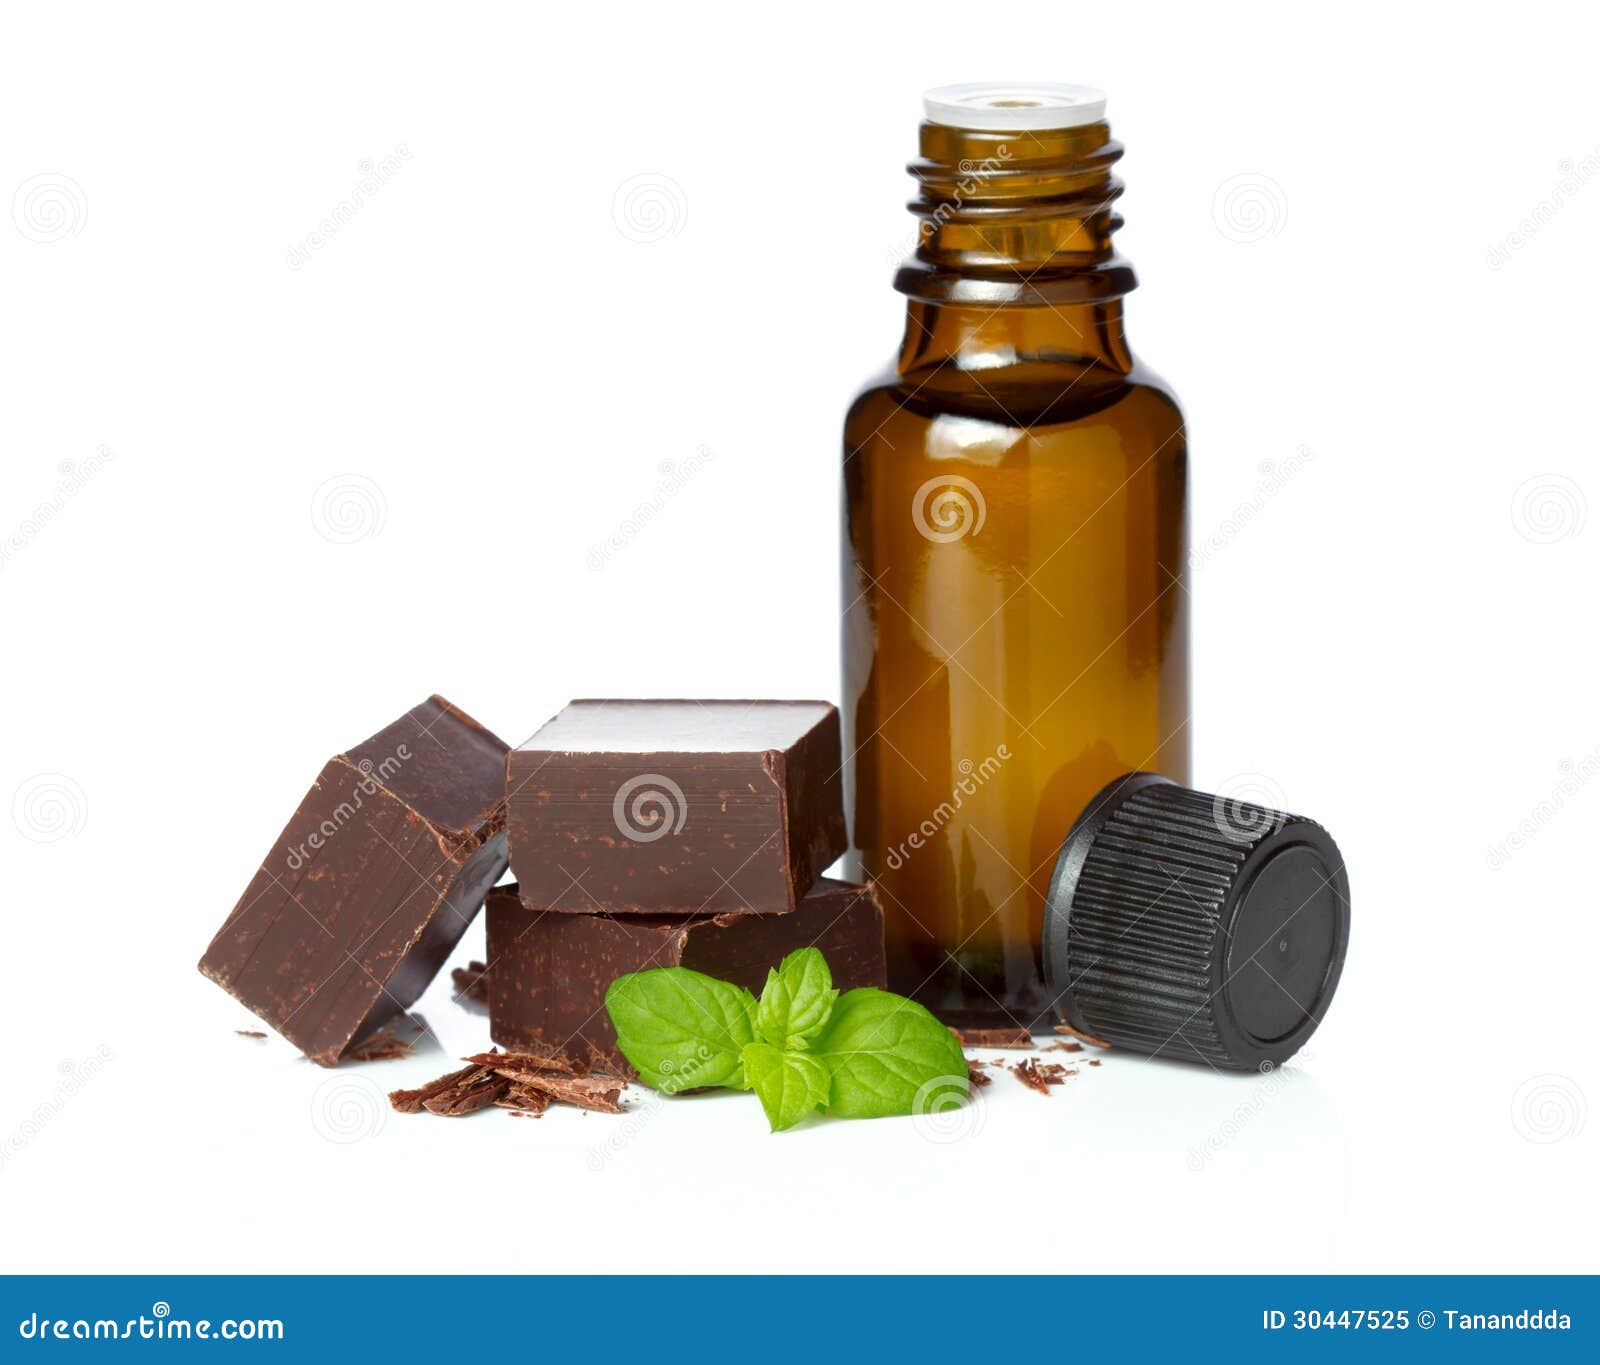 Spiced Chocolate Flavoring Oil — TKB Trading, LLC